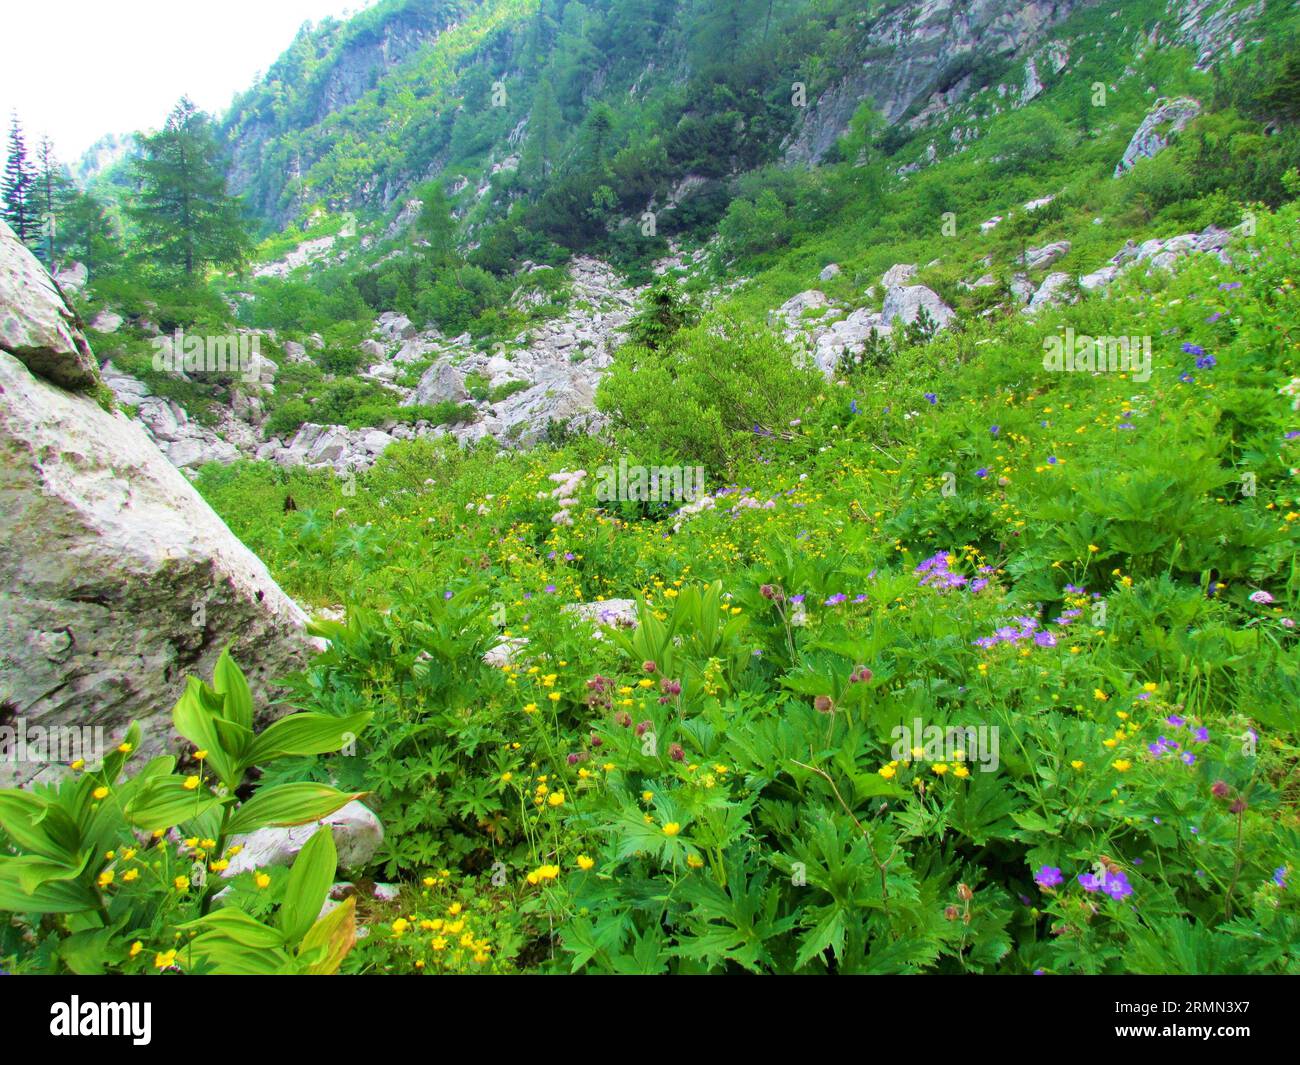 Colorful lush alpine meadow under Crna prst in Julian alps in Slovenia full of wildflowers incl. blue wood crane’s bill (Geranium sylvaticum) yellow c Stock Photo